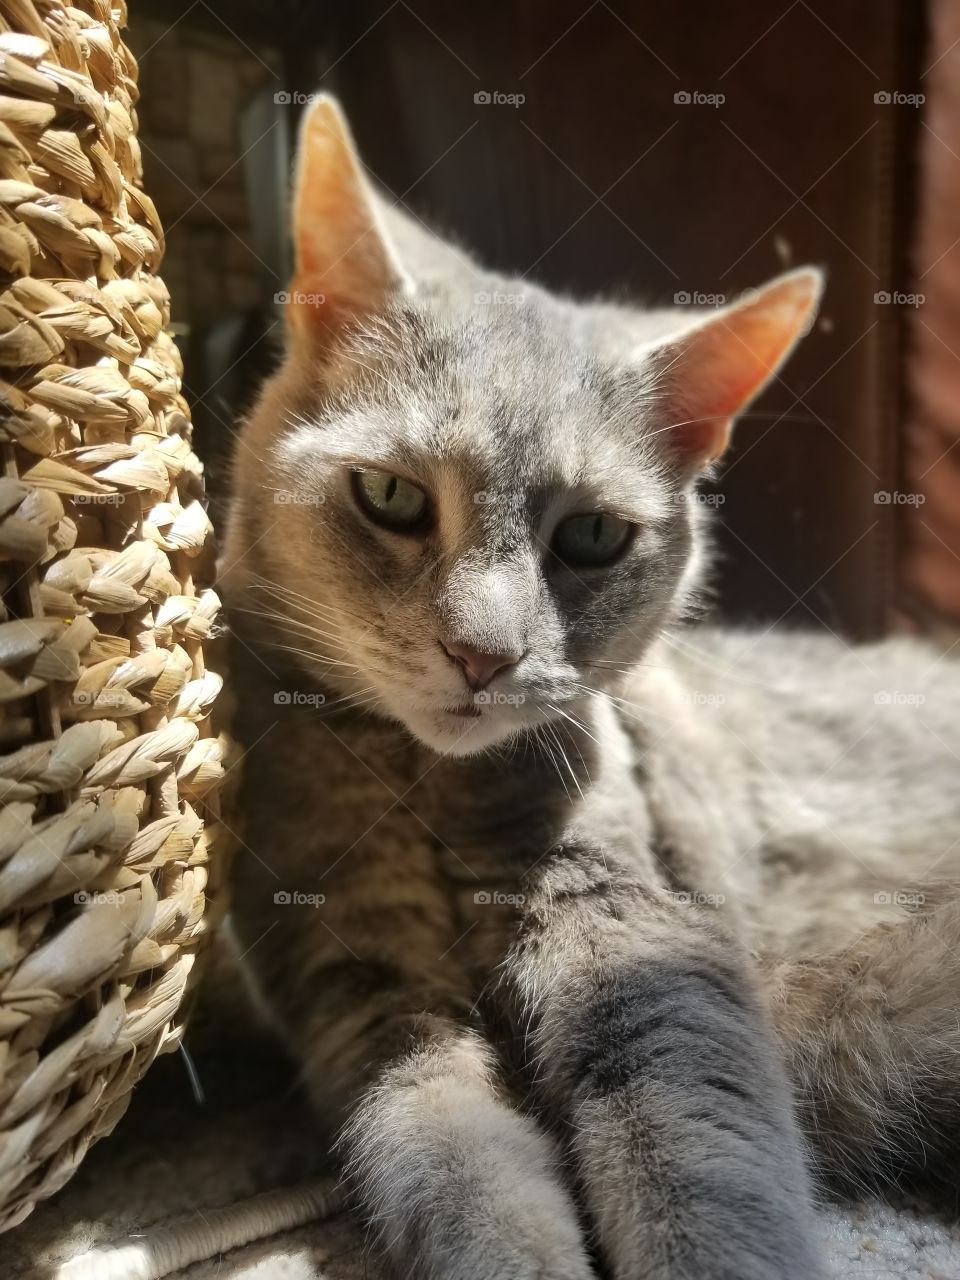 My 14 yr old tabby cat Roxie